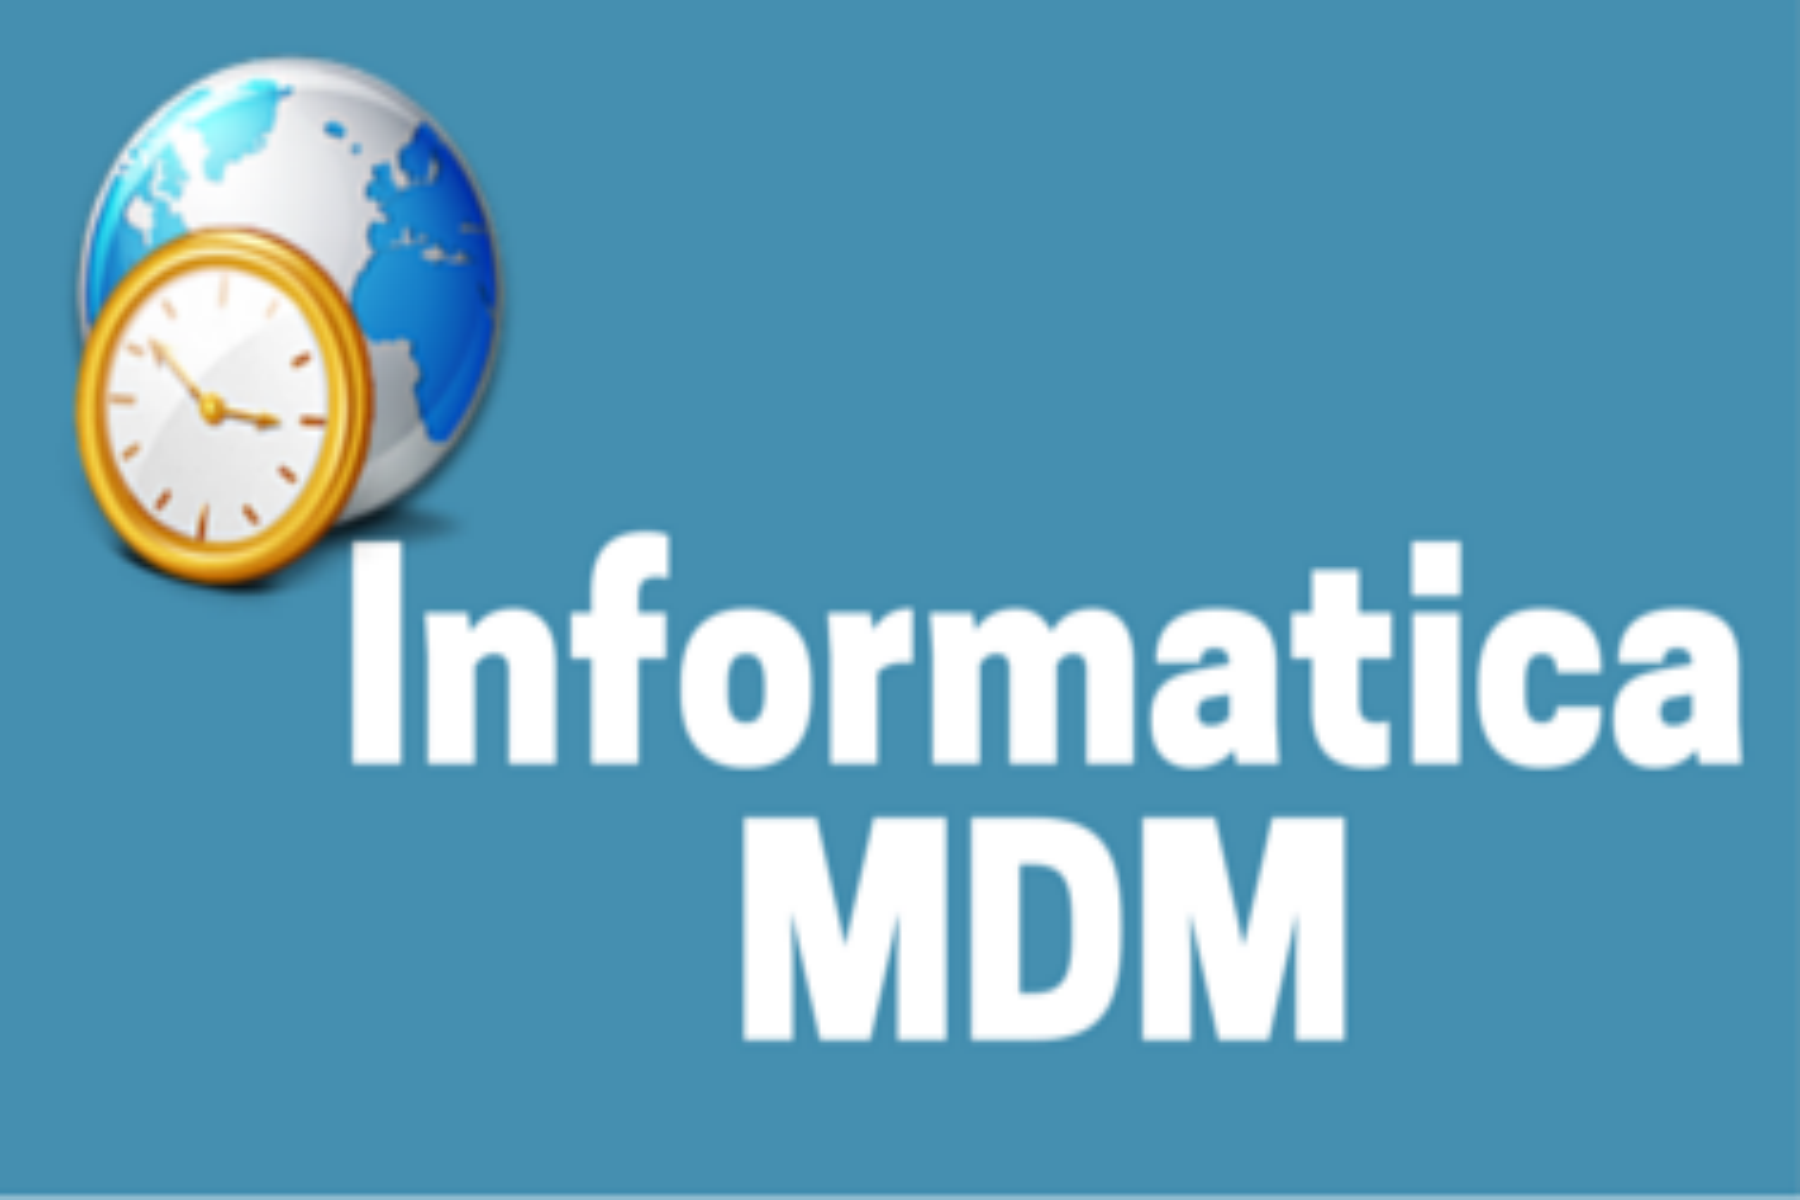 Informatica MDM Training in Chennai